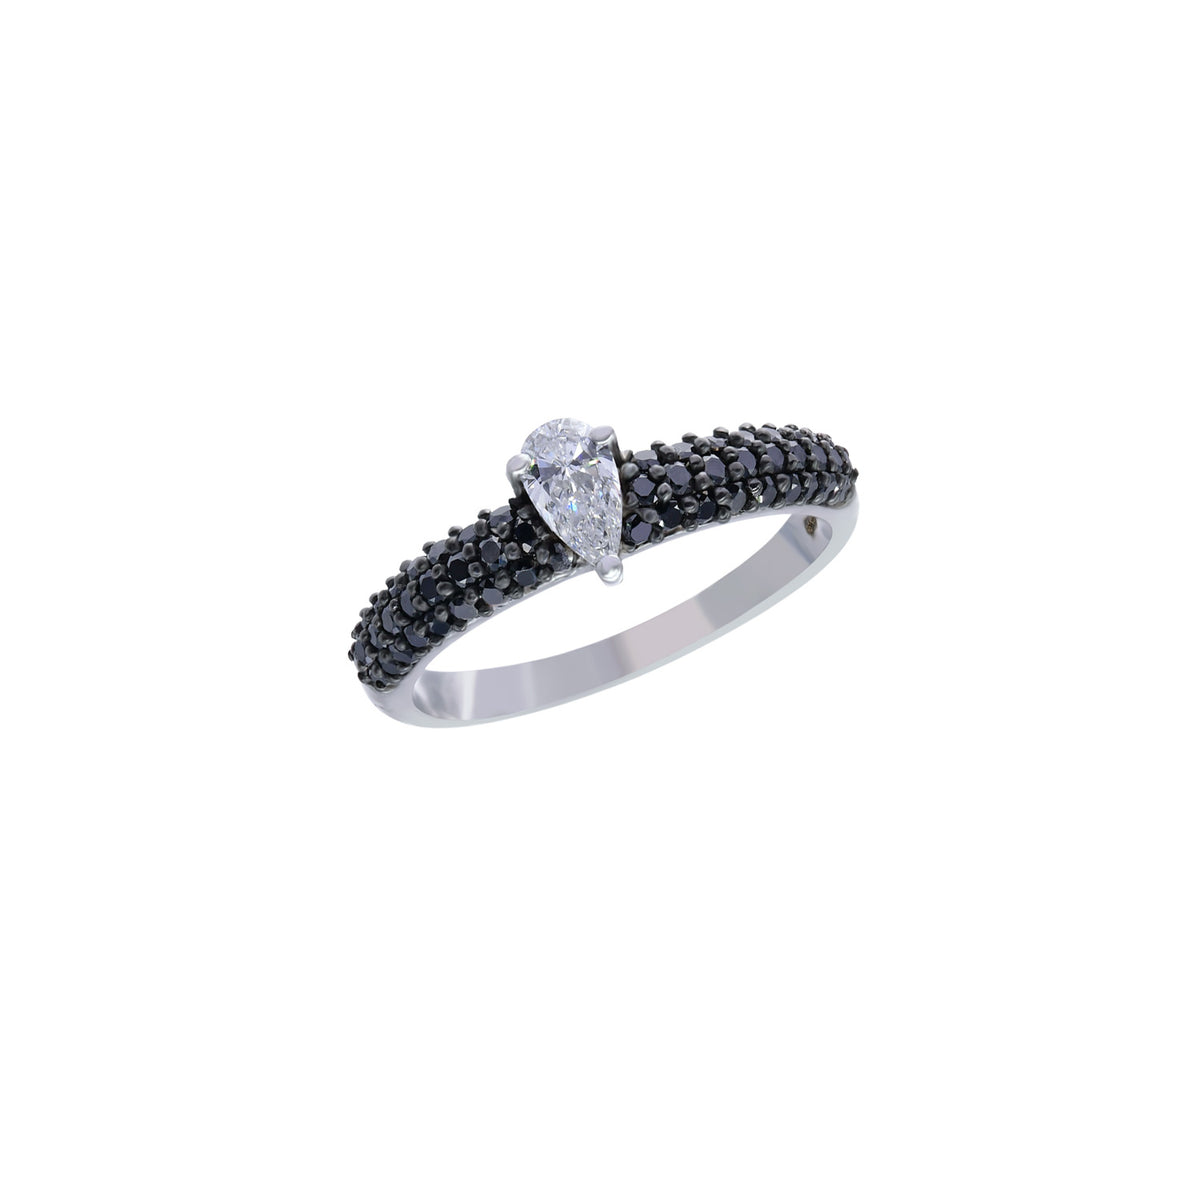 Engagement ring. Diamond engagement ring. White and black diamond ring. Black diamond ring. Pear shaped diamond ring.